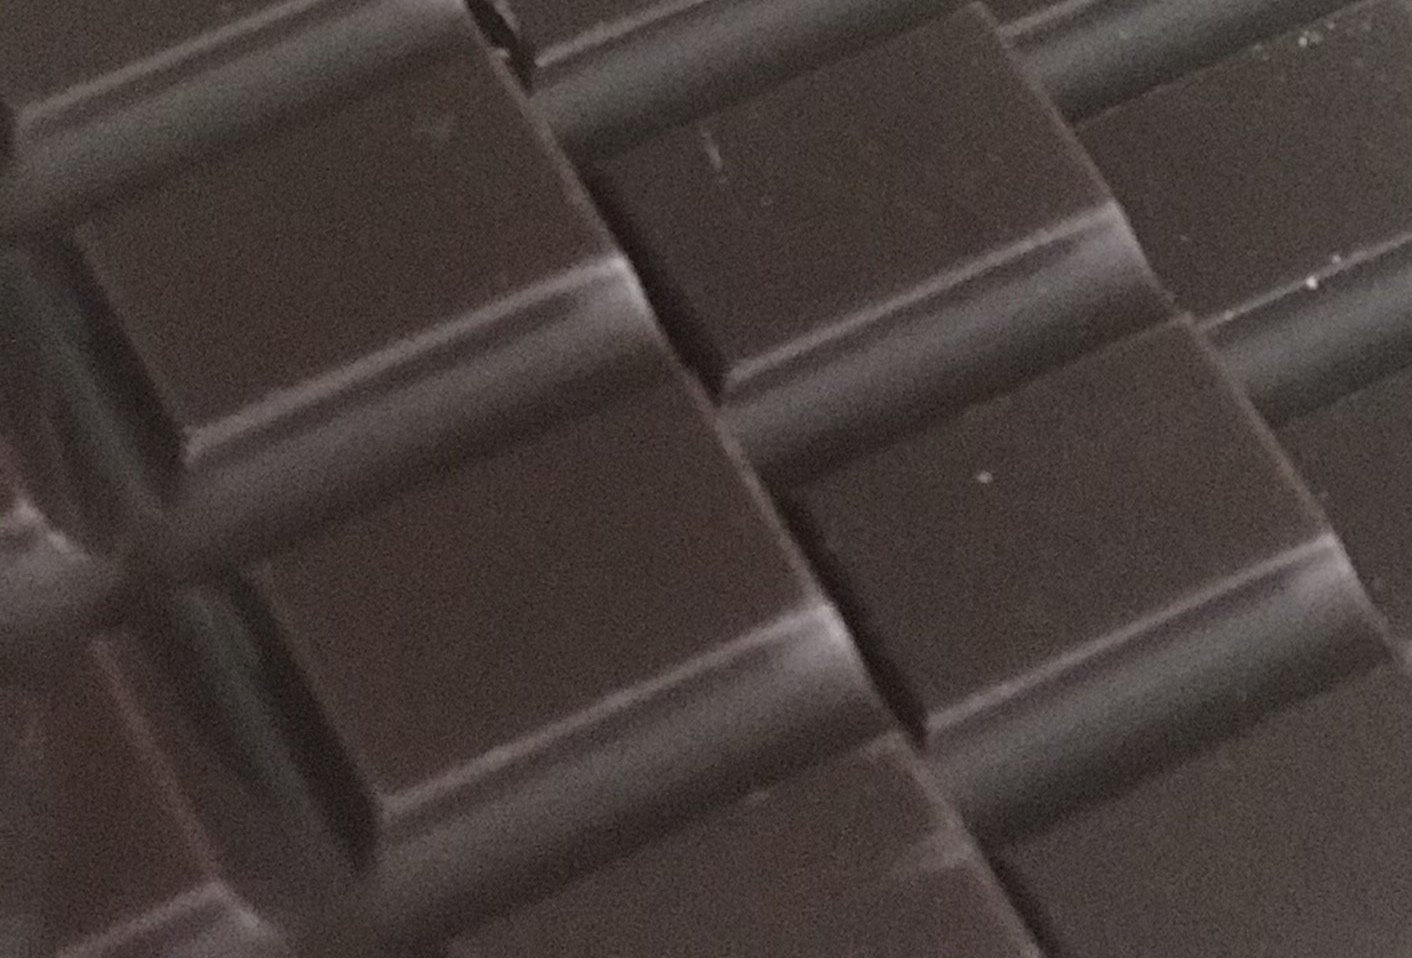 100% Unsweetened Chocolate